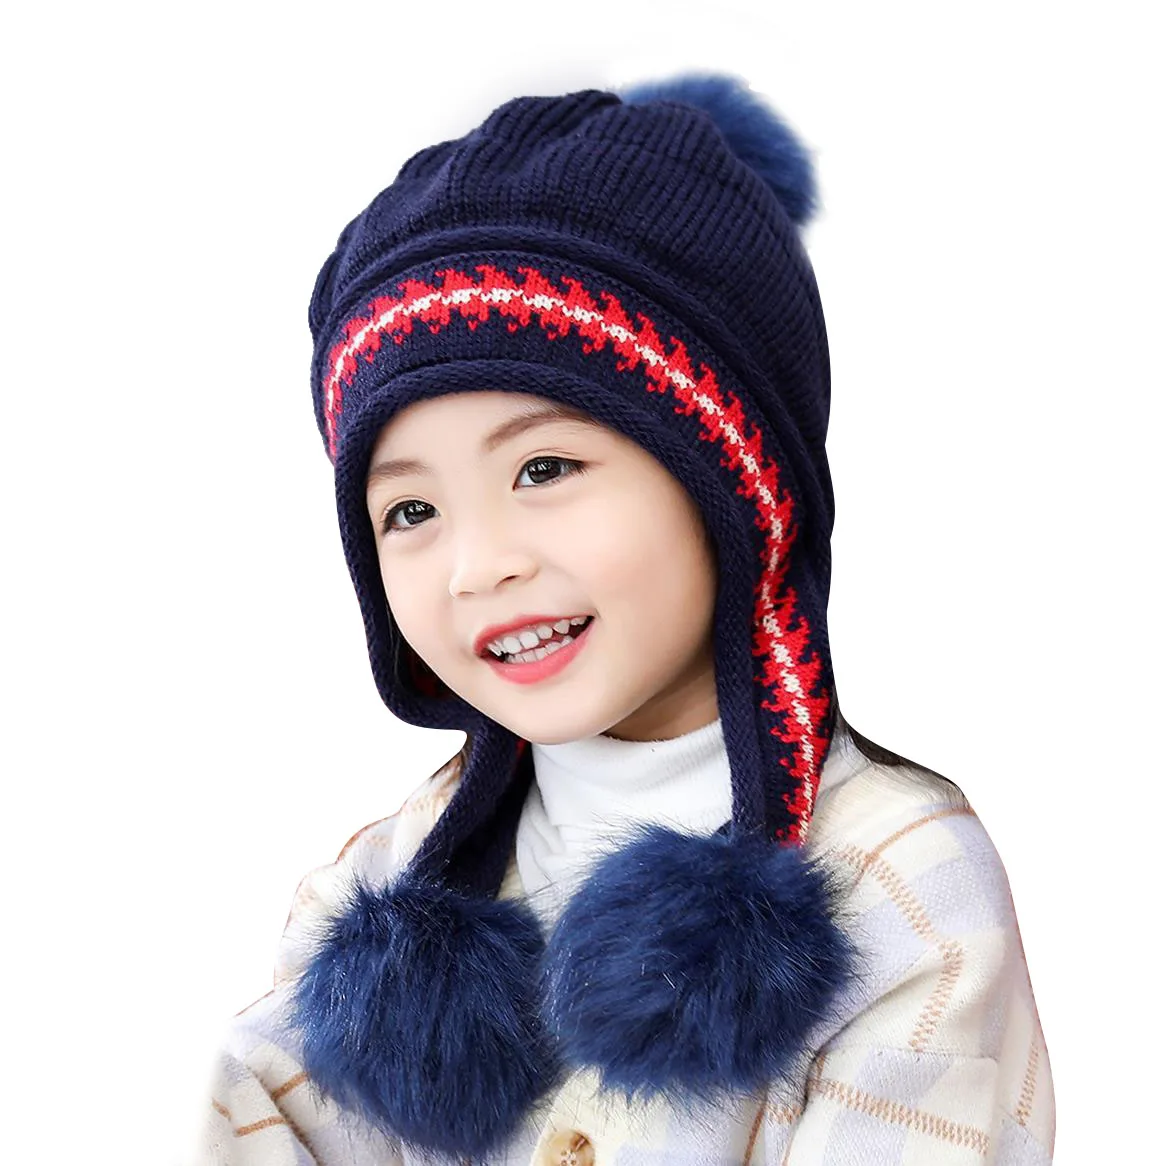 Baby Boys Girls knitted Hat Kids Children Ear Flap Cap Winter Warm Plush Hat Fashion Cute Beanies Bonnet Outdoor Casual Cap Gift